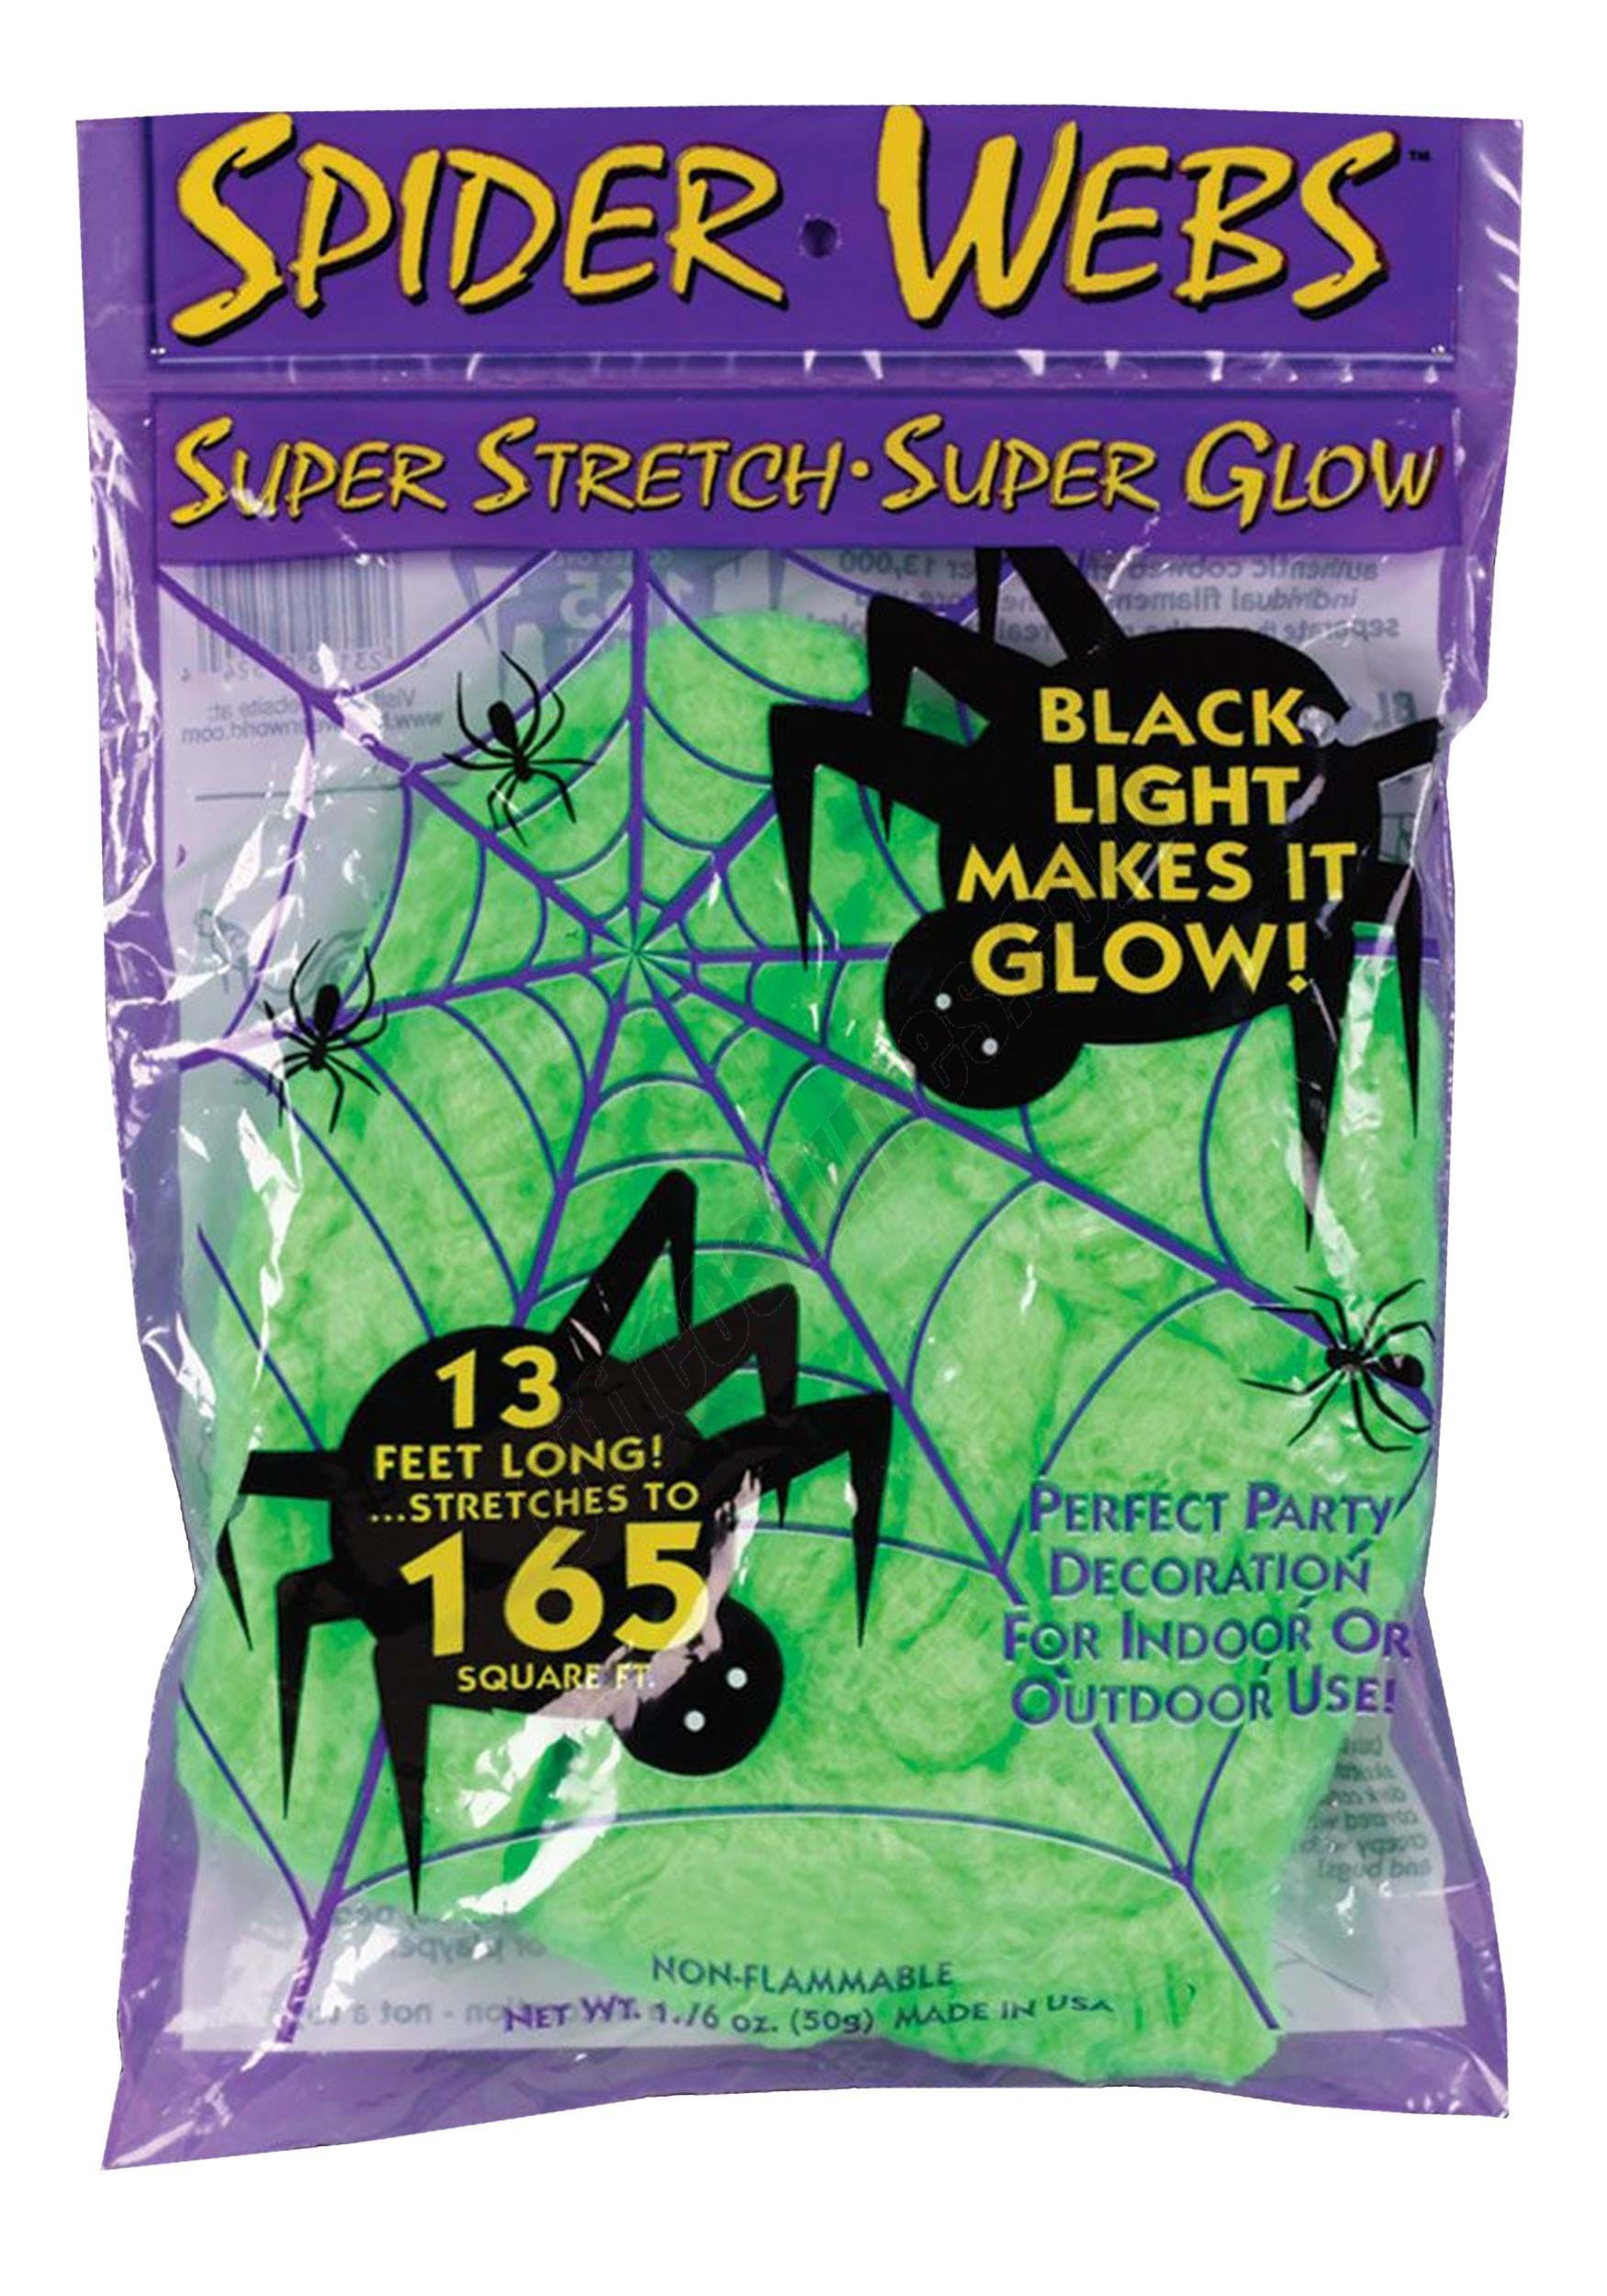 50 Gram Super Stretch Cosmic Black Light Web Promotions - 50 Gram Super Stretch Cosmic Black Light Web Promotions